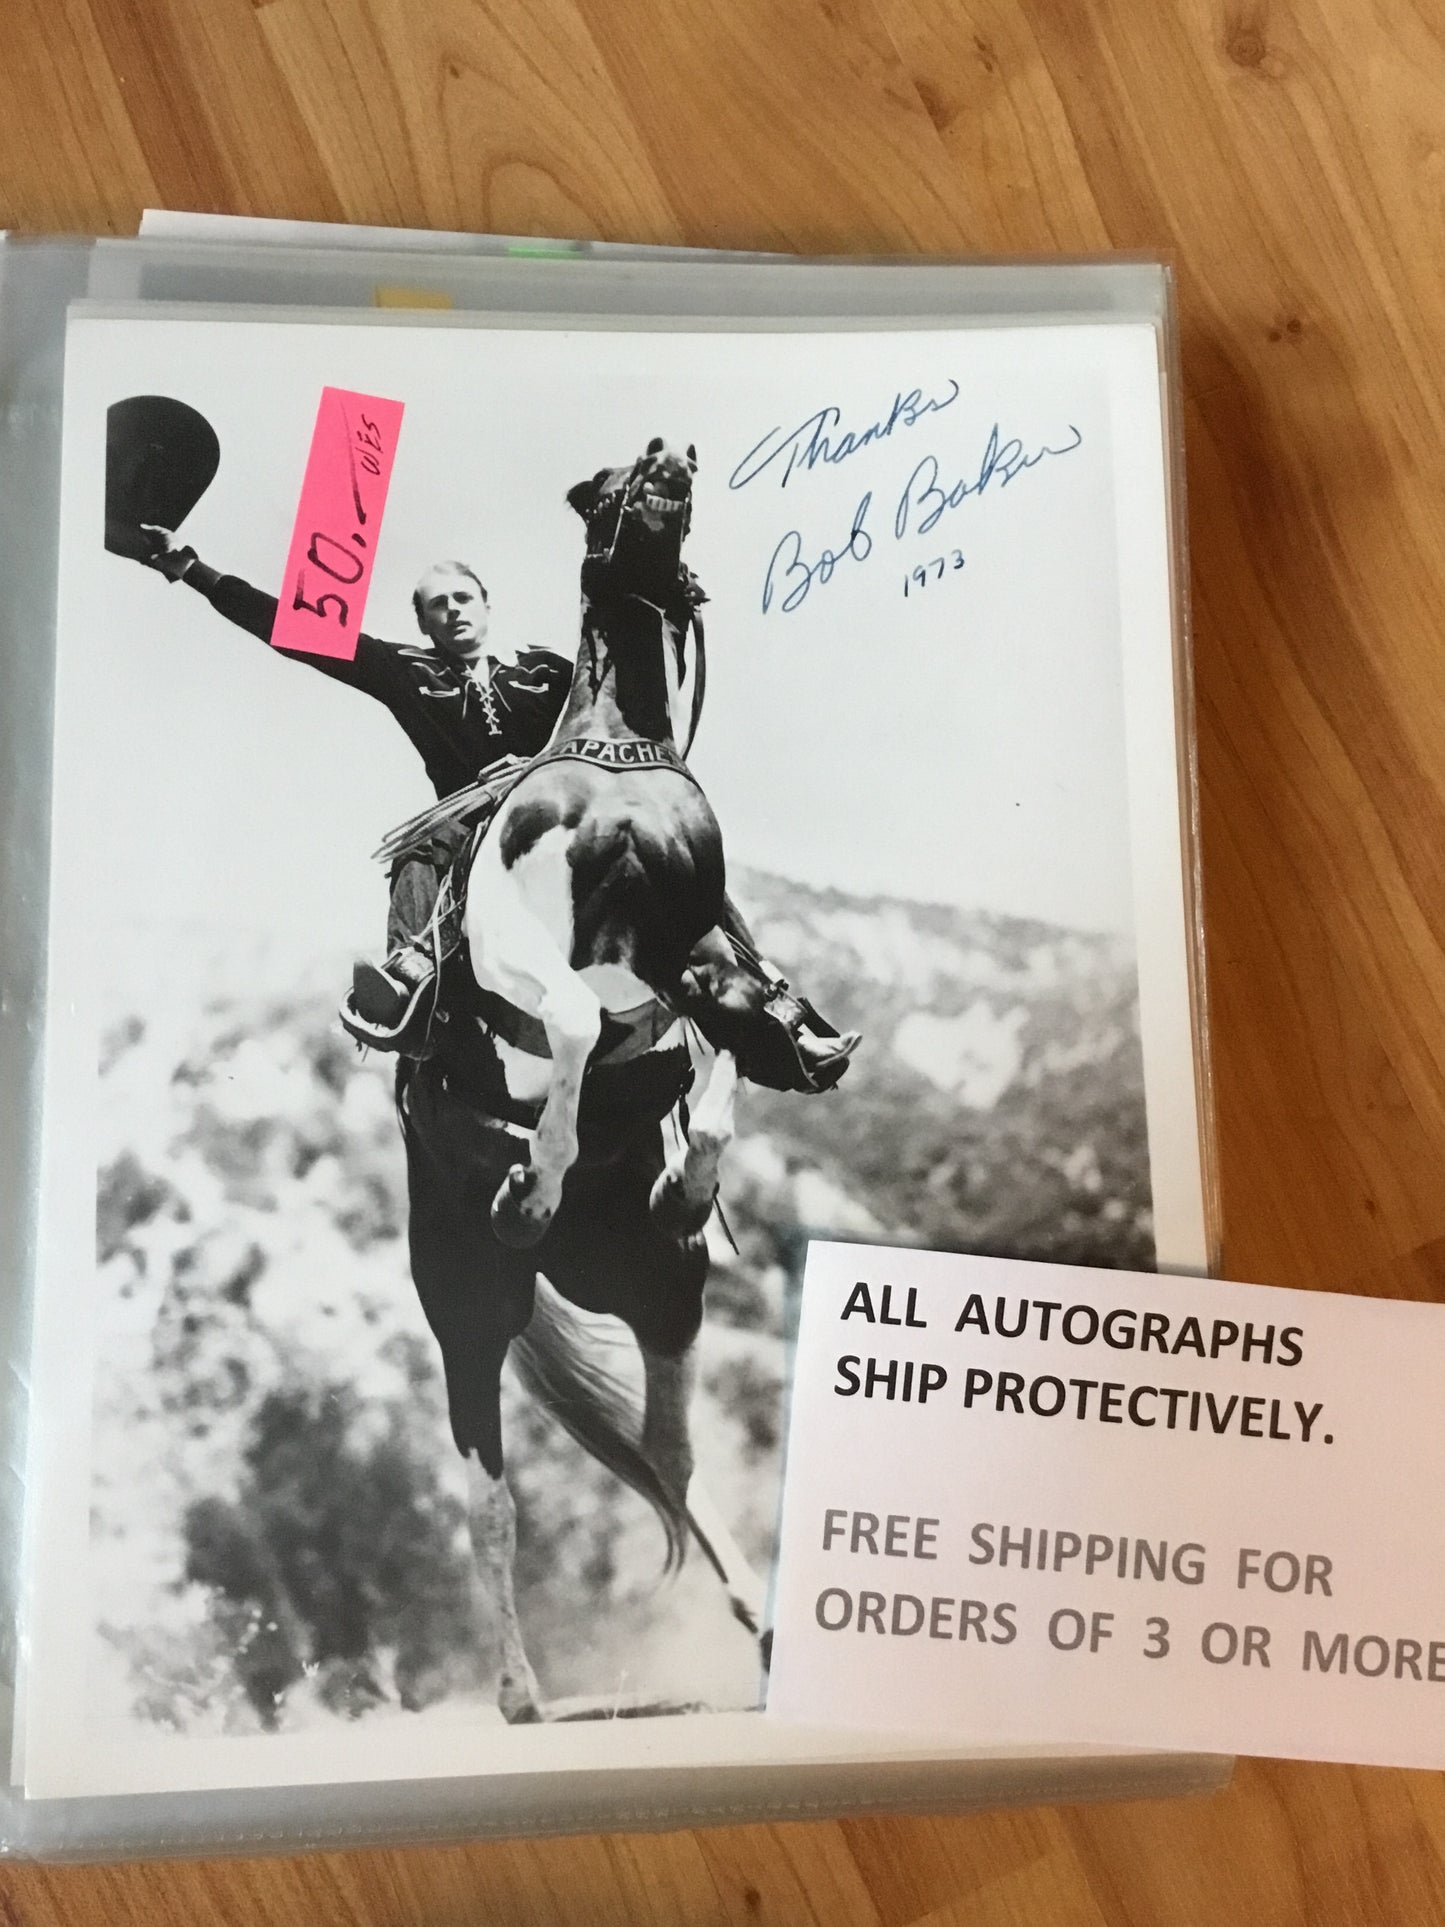 Bob Baker cowboy star autograph